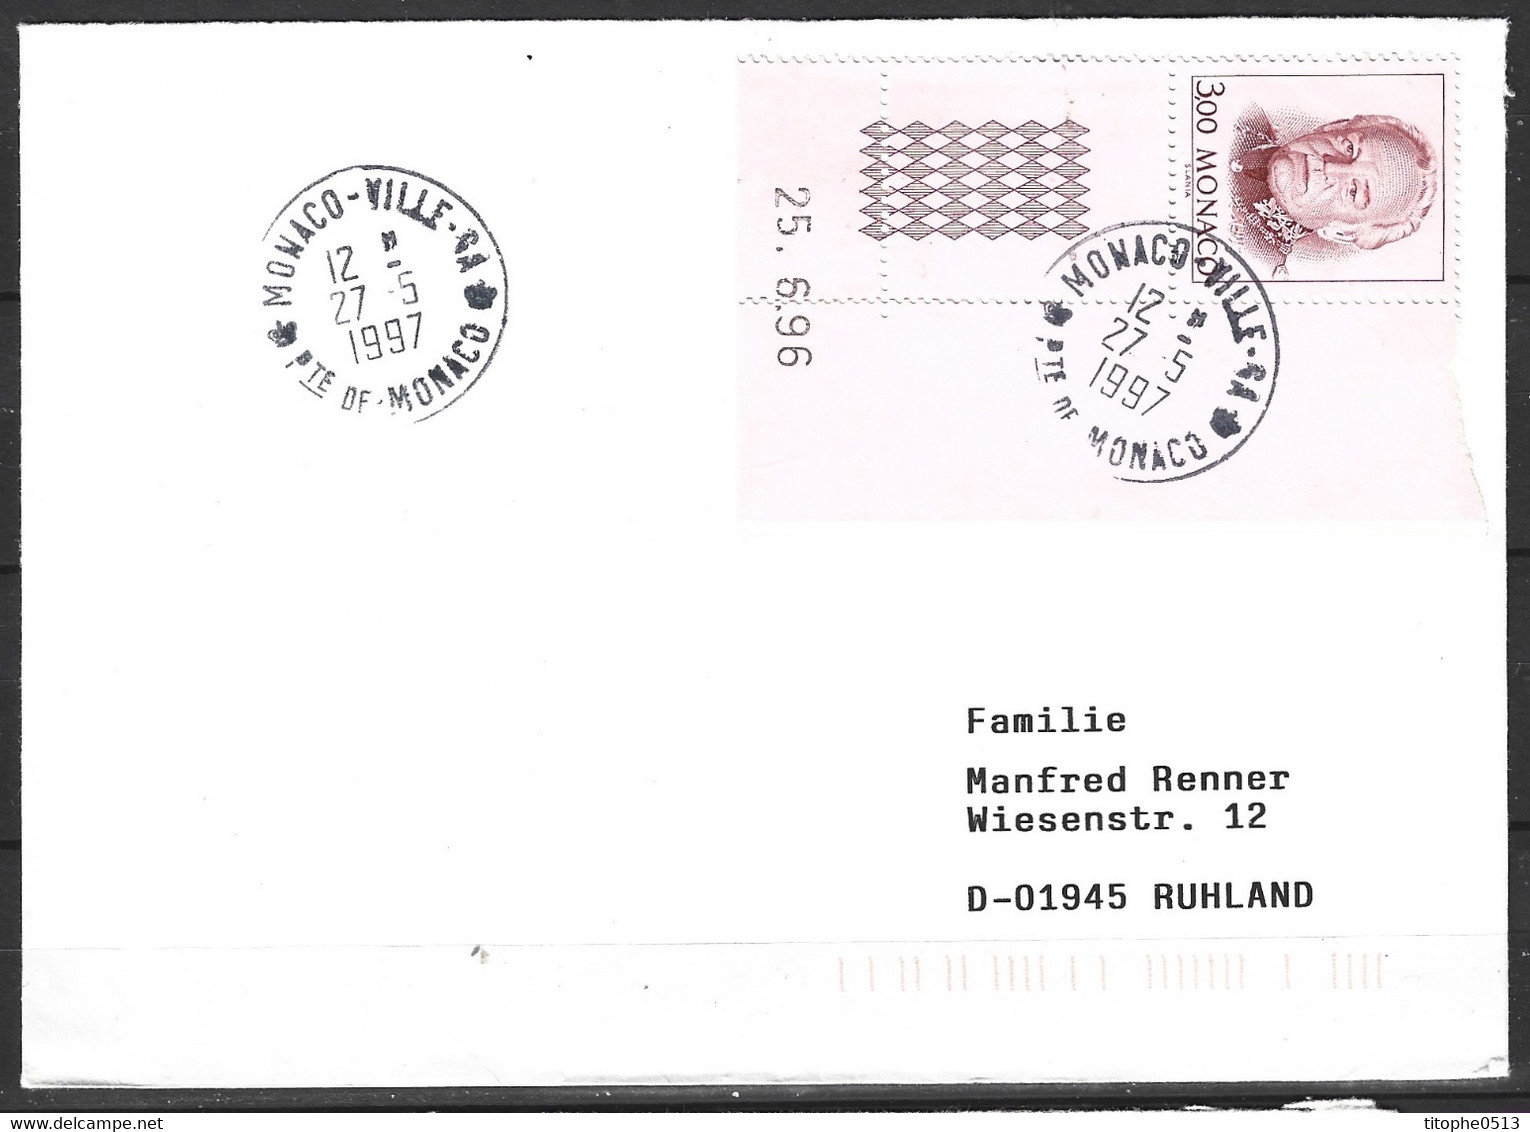 MONACO. N°2055 De 1996 Sur Enveloppe Ayant Circulé. Prince Rainier III. - Covers & Documents